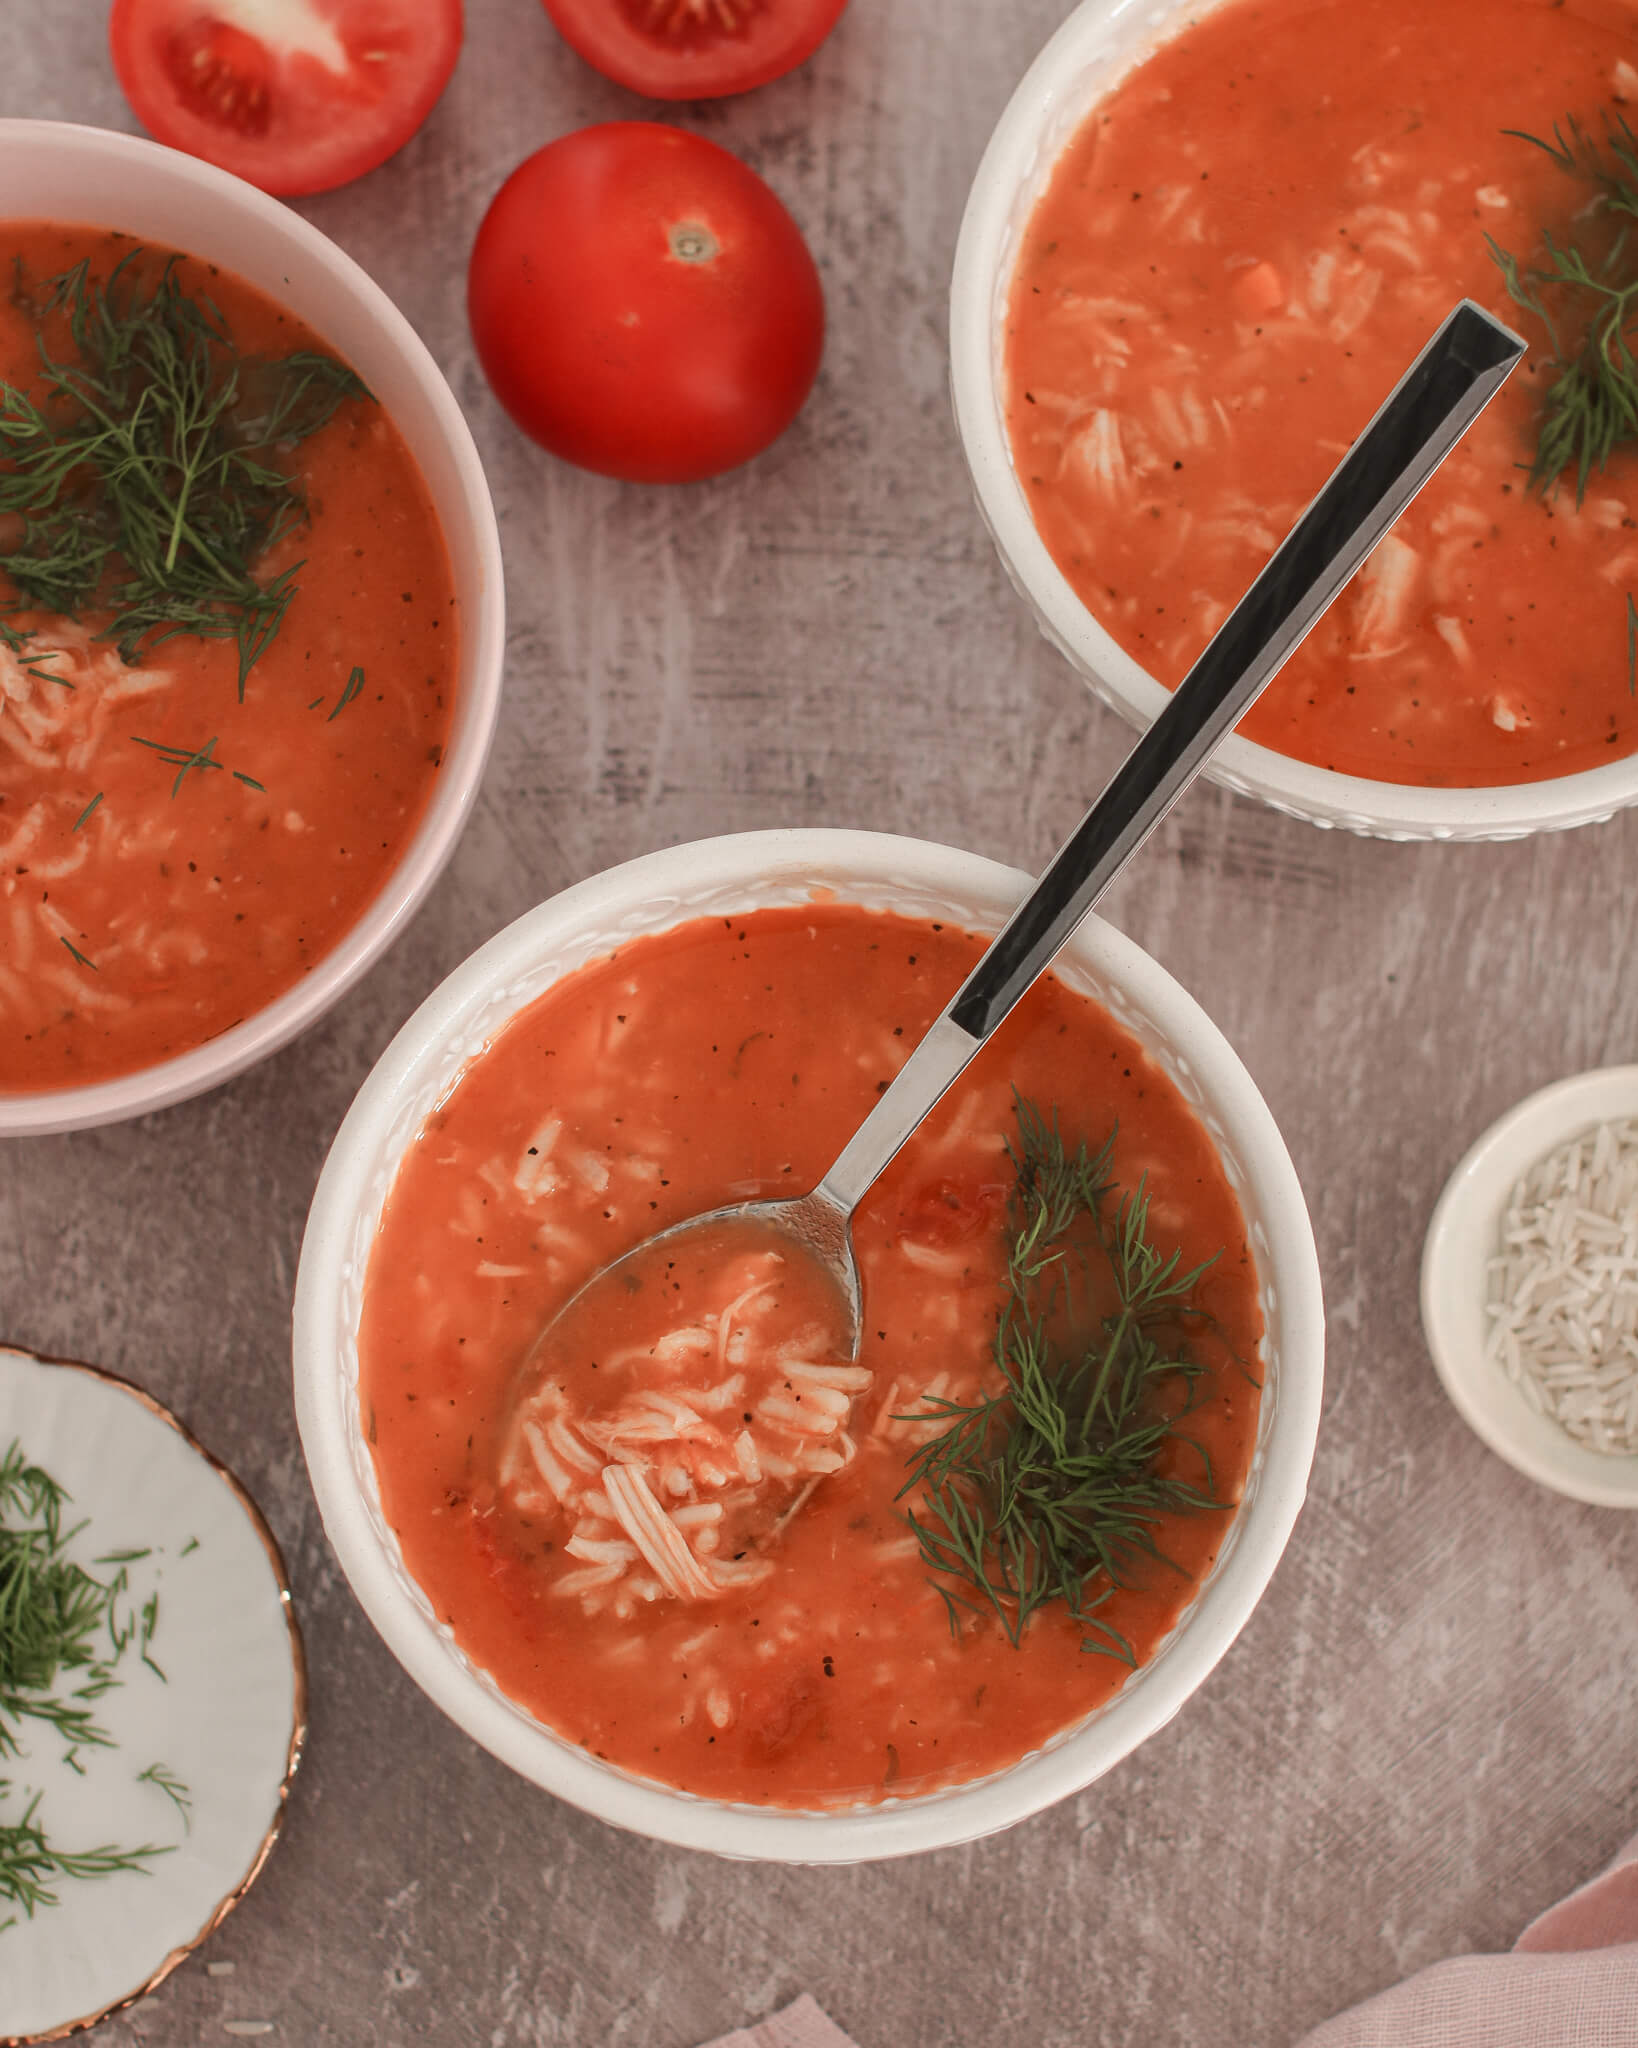 pomidoru sriuba su ryziais